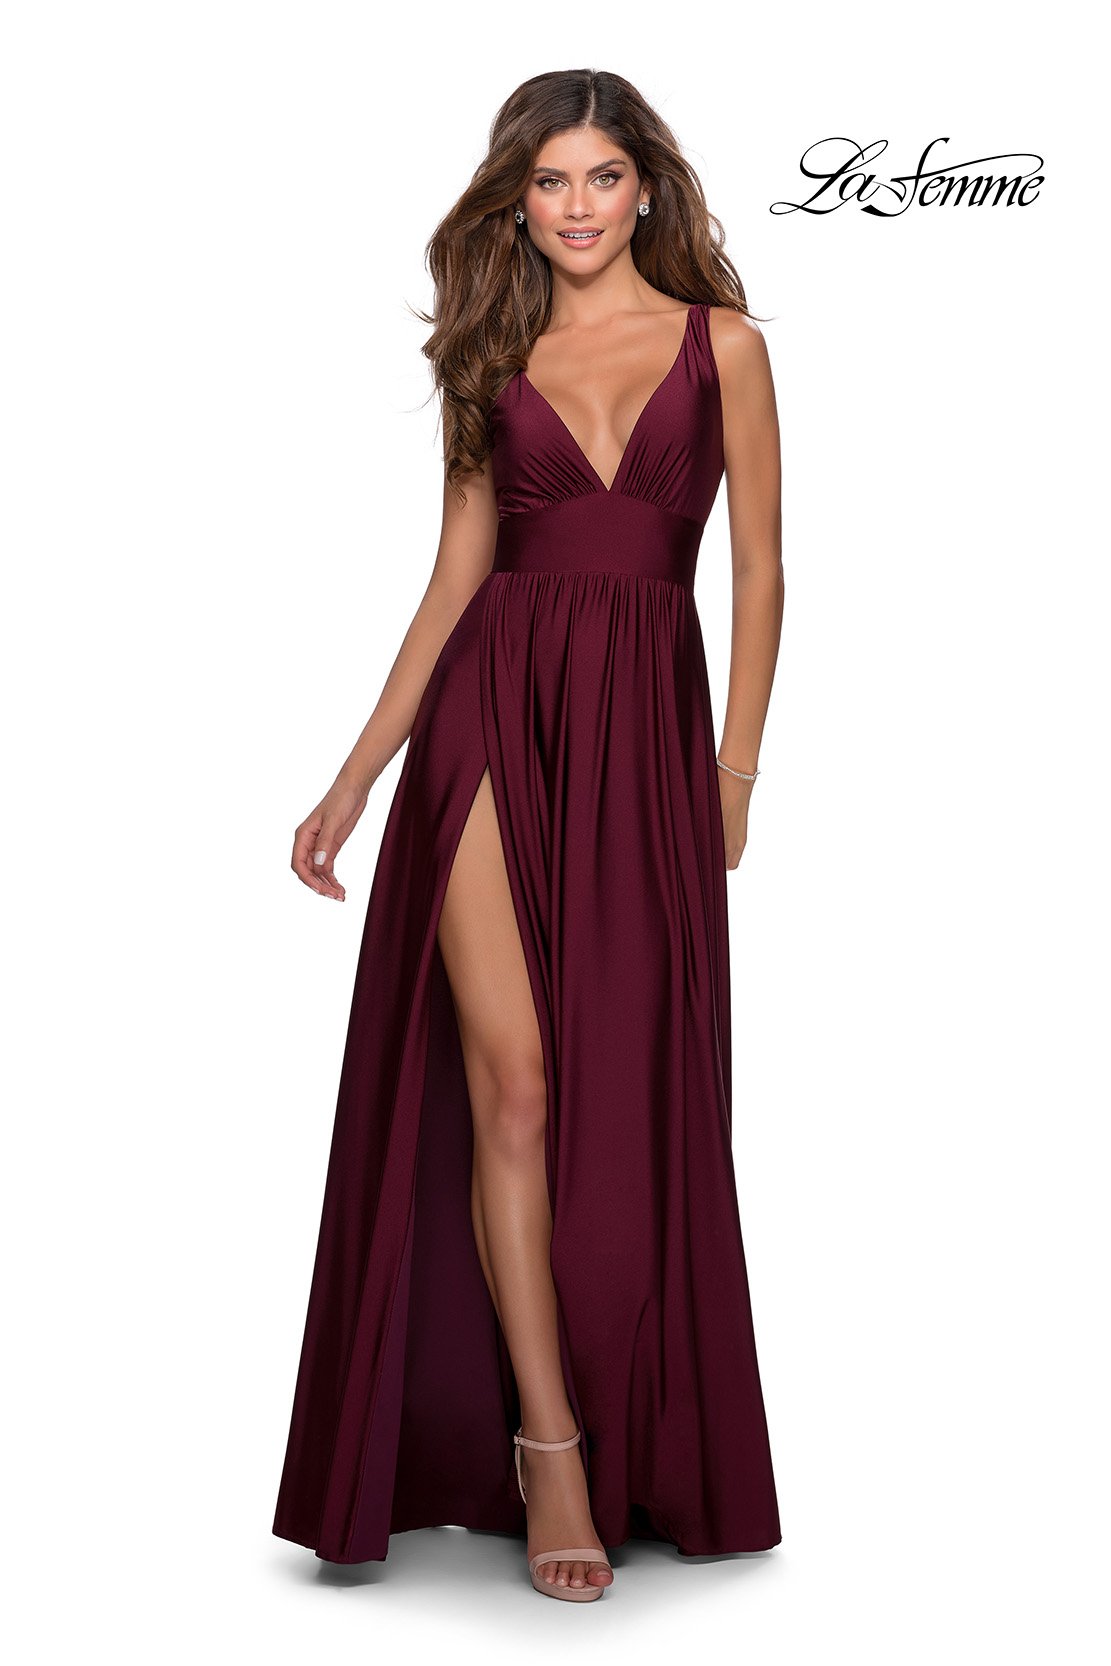 La Femme 28547 Dress - La Femme Prom Dresses - Formal Approach